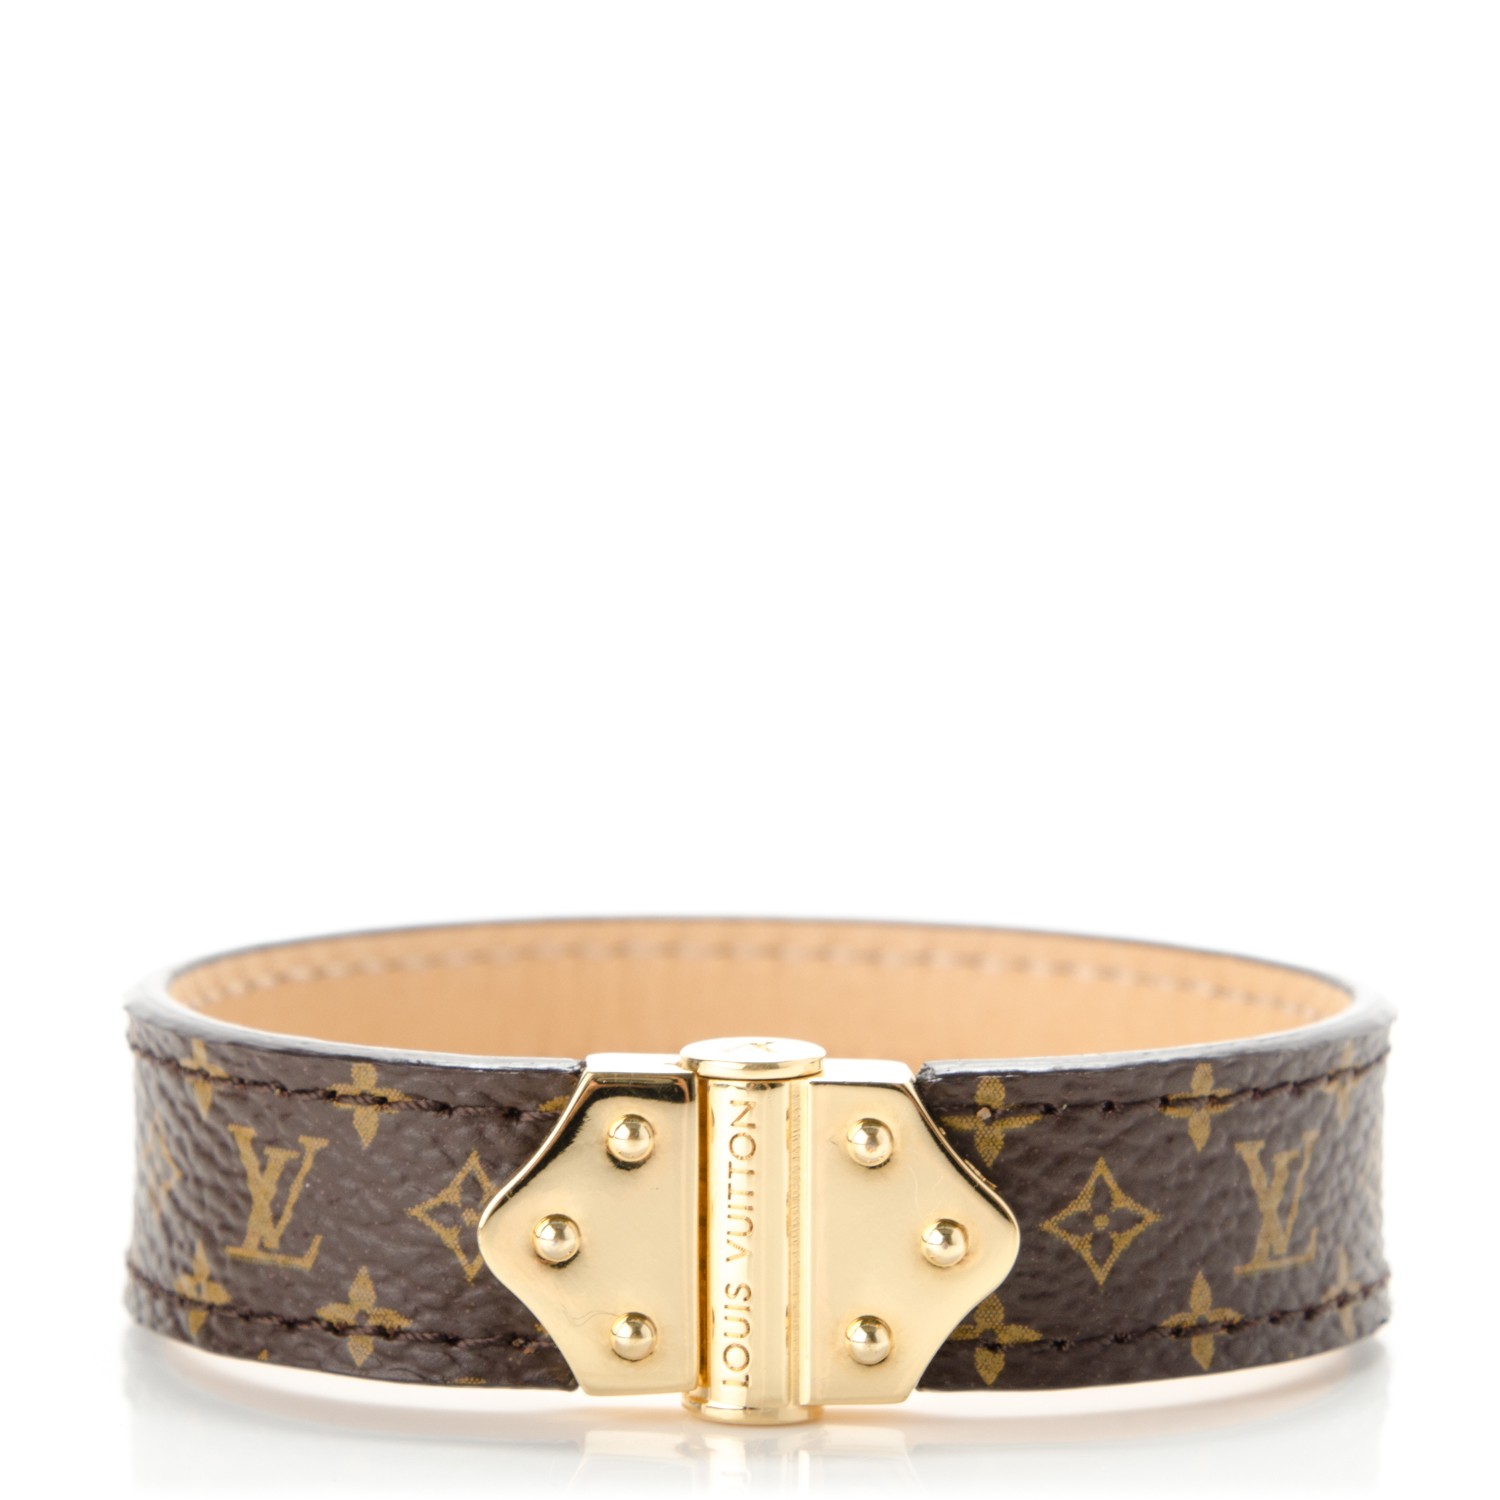 Unboxing Louis Vuitton crazy in lock bracelet 